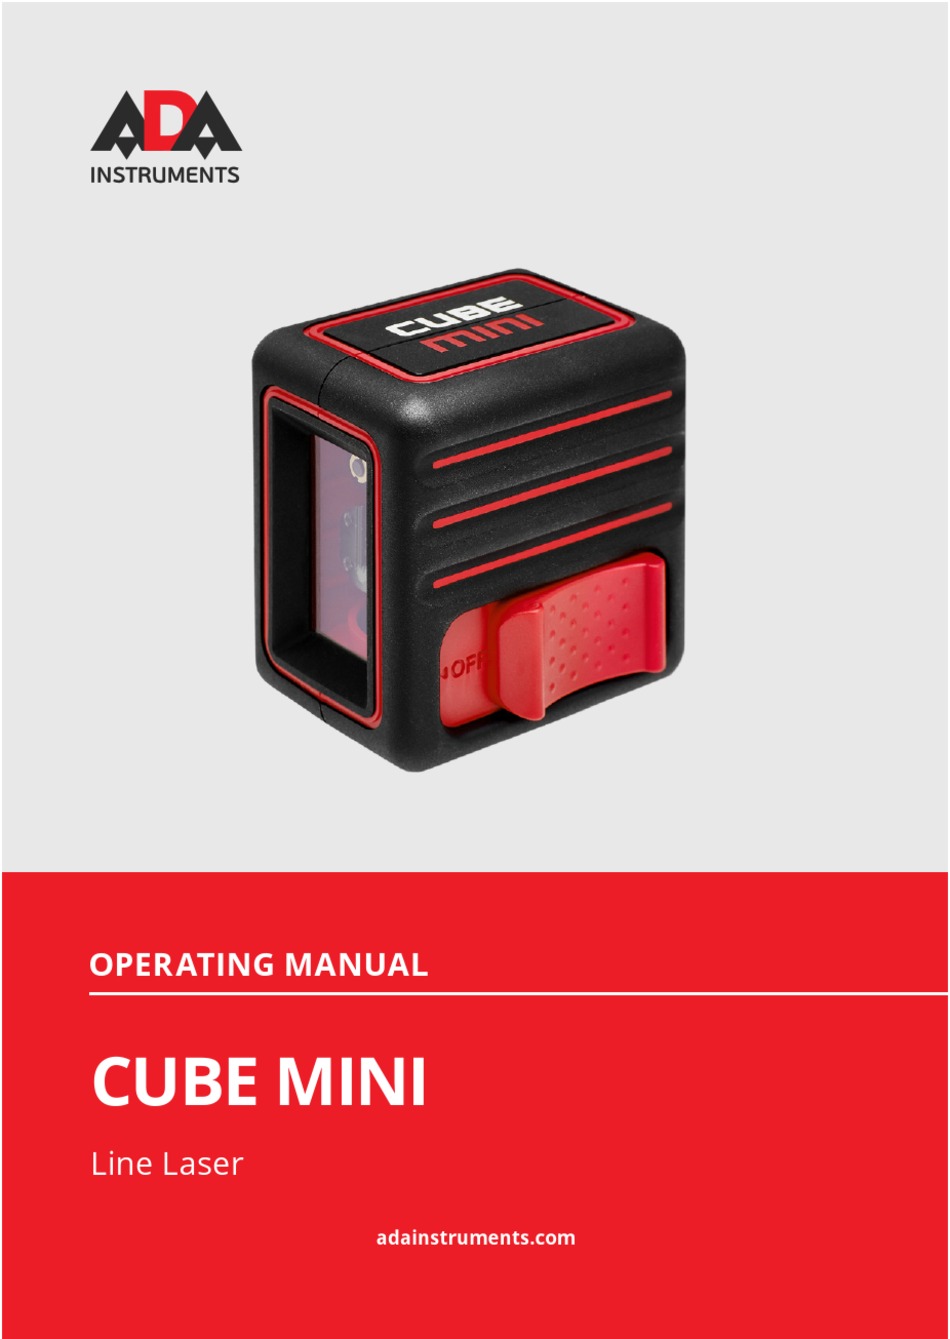 Ada cube mini professional